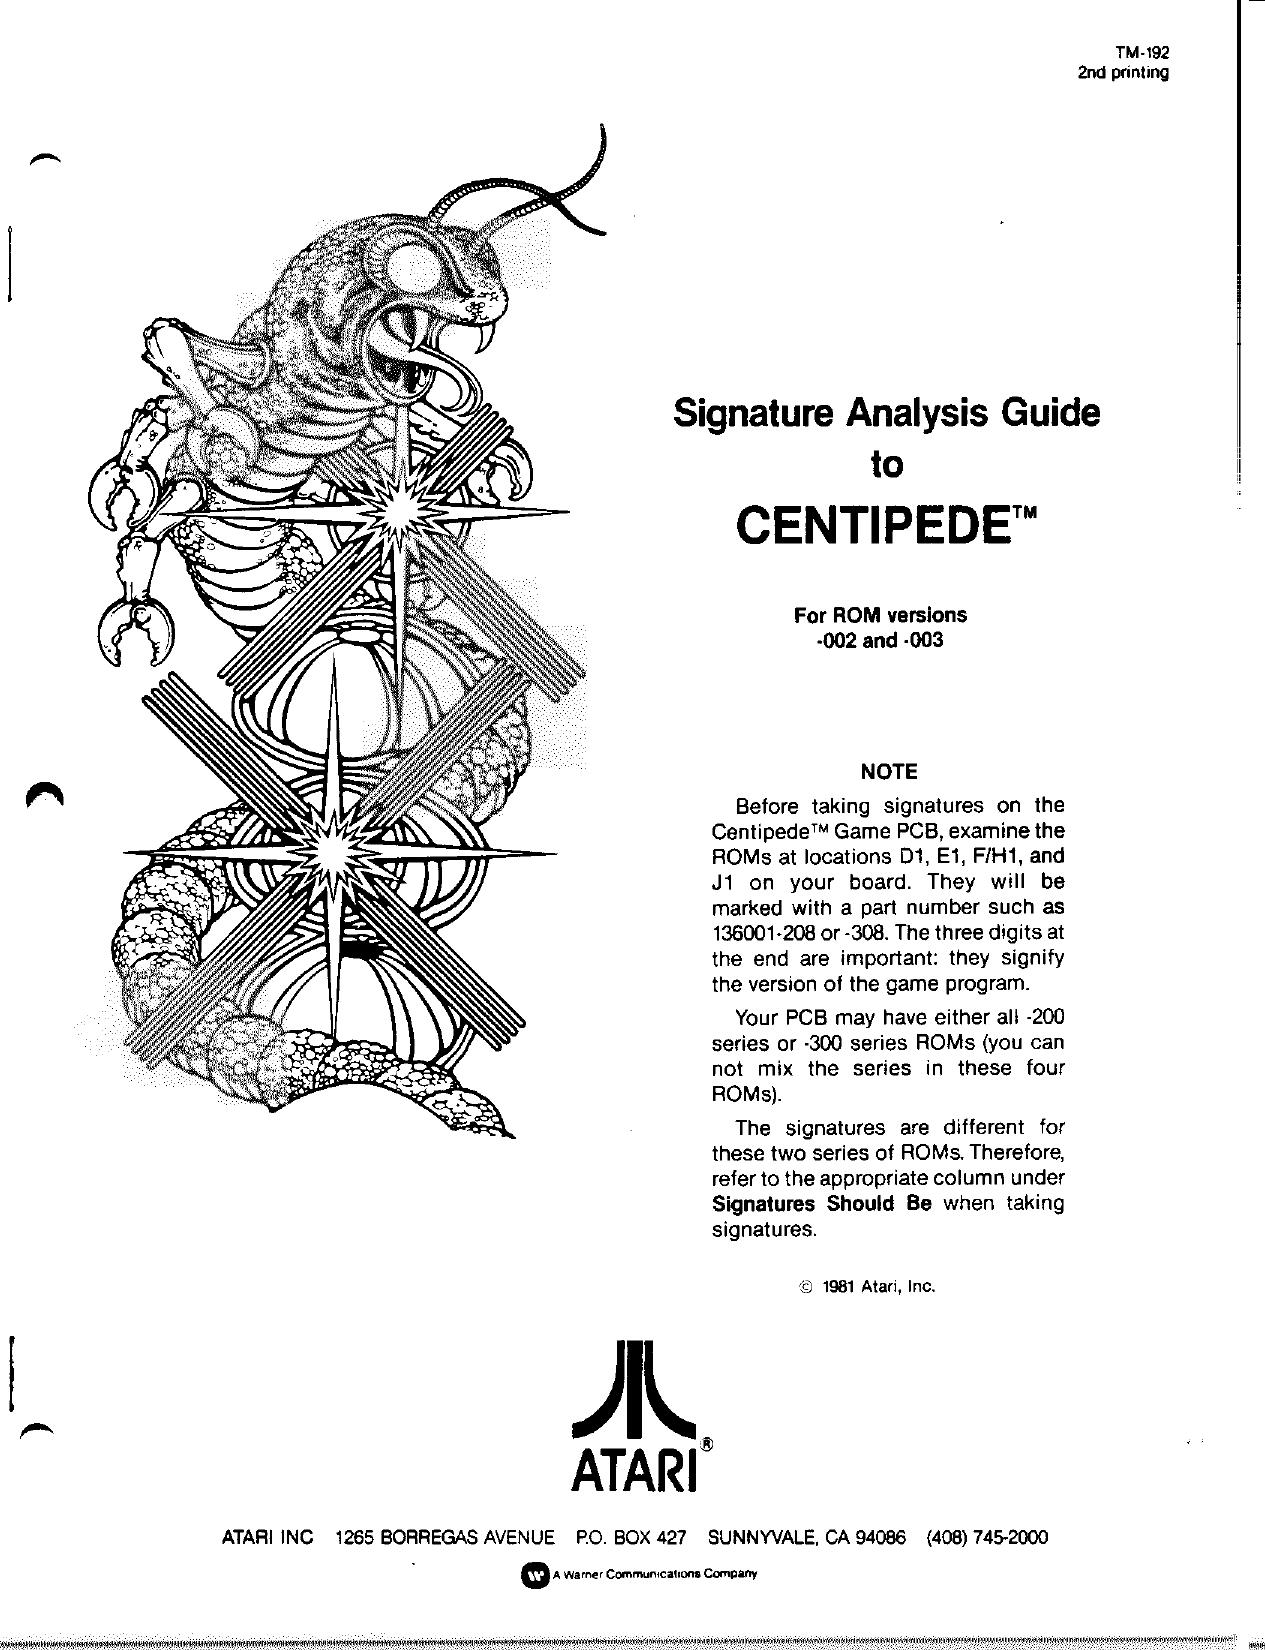 Centipede TM-192 Signature Analysis 2nd Printing